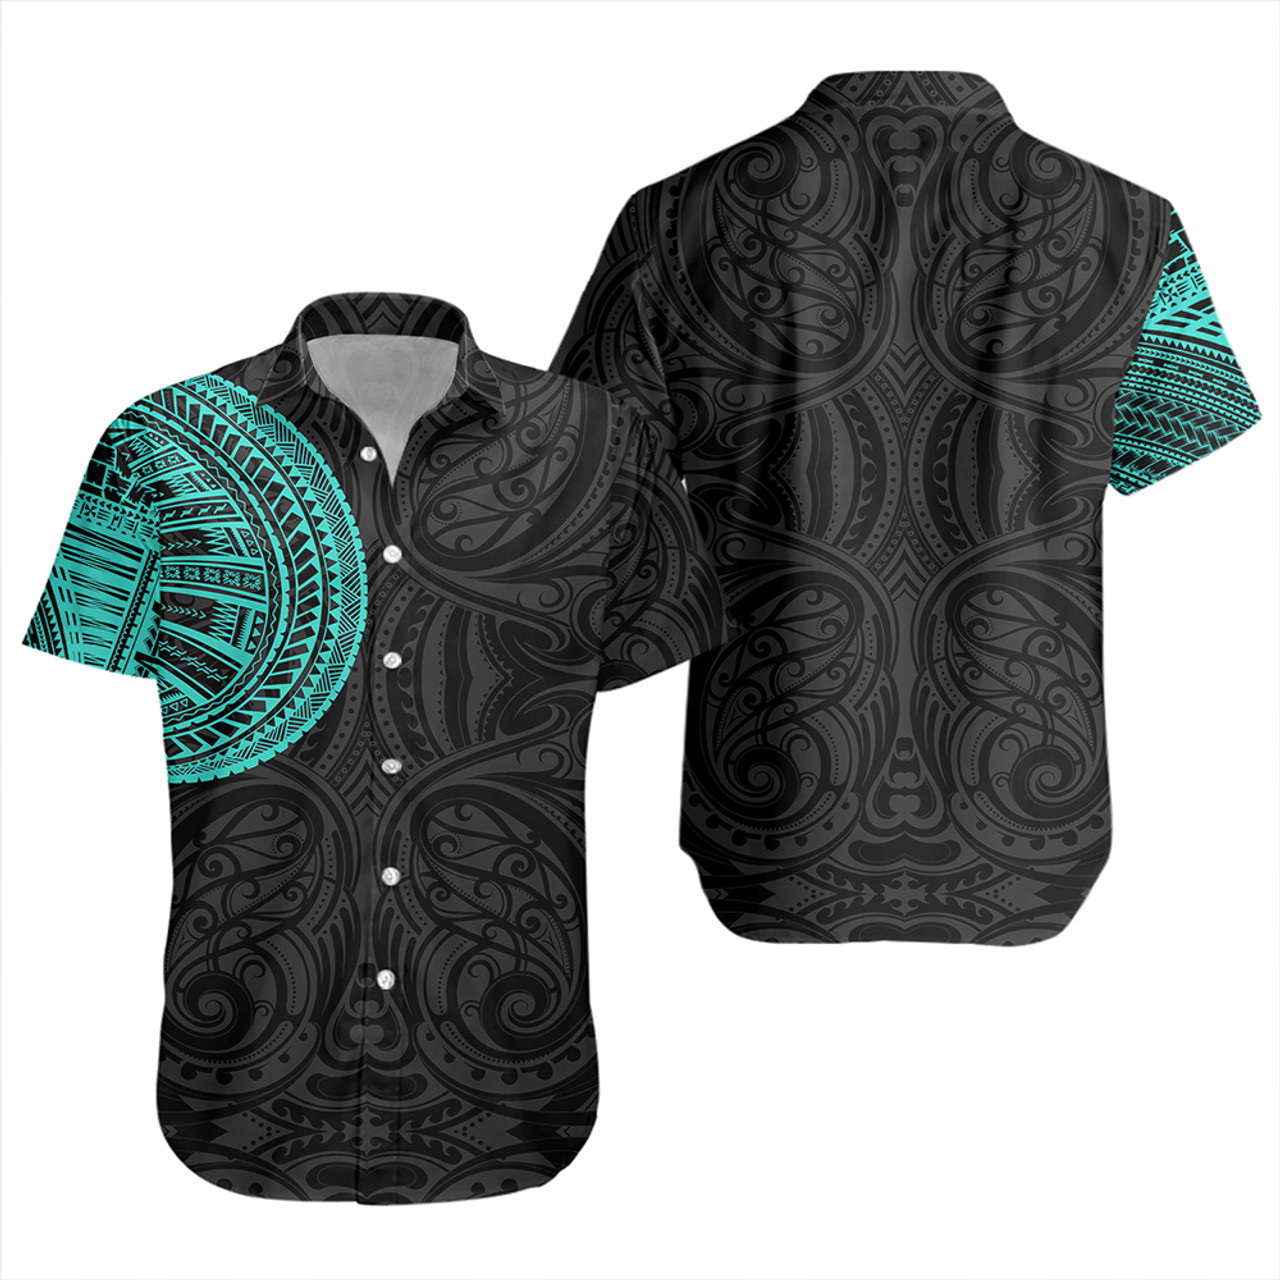 Samoa Tribal Maori Tattoo Roman Reigns Short Sleeve Shirt Turquoise